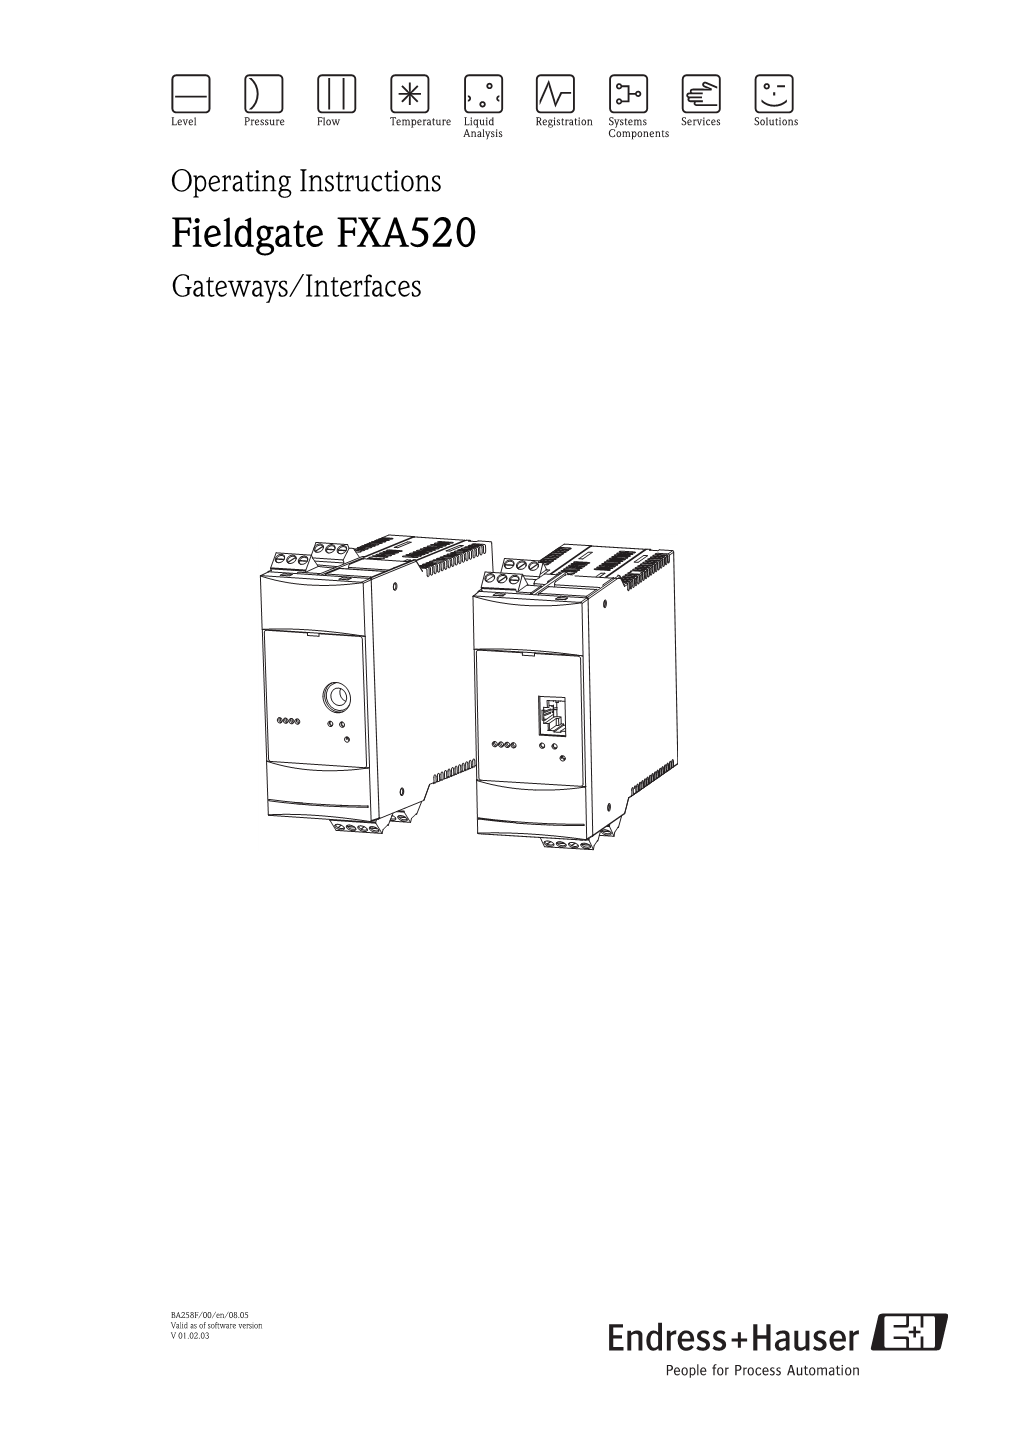 Operating Instructions Fieldgate FXA520 Gateways/Interfaces